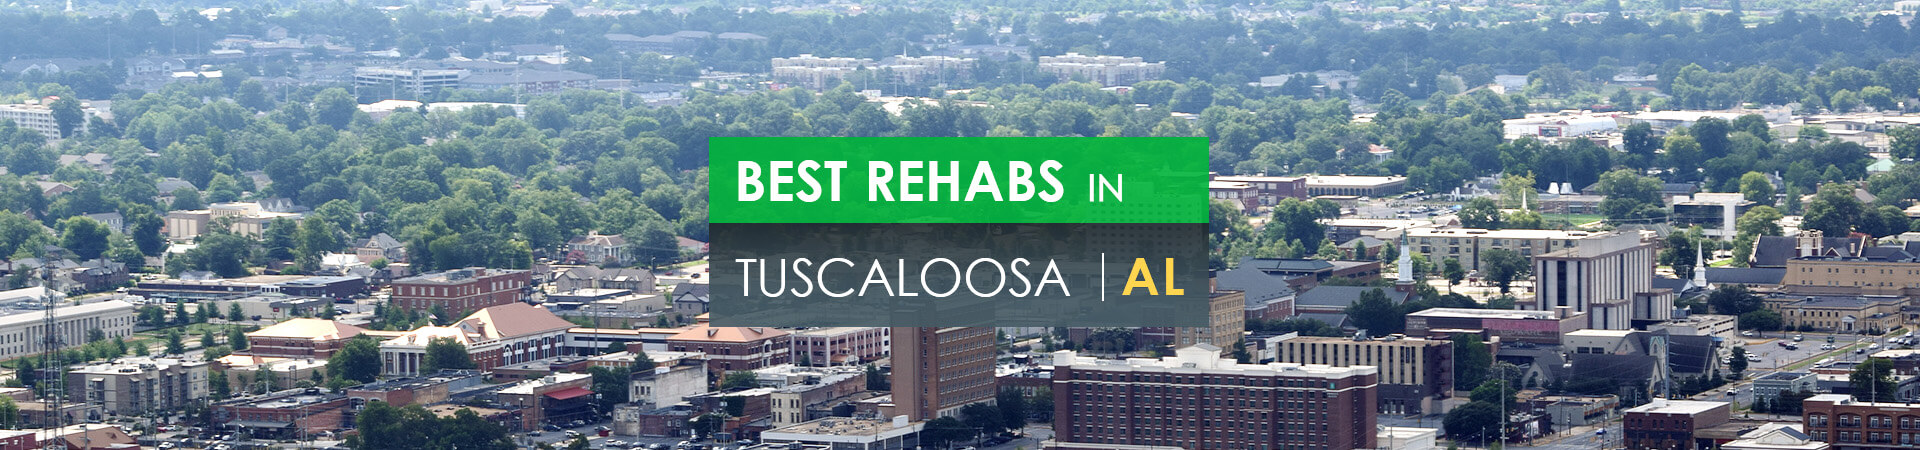 Best rehabs in Tuscaloosa, AL